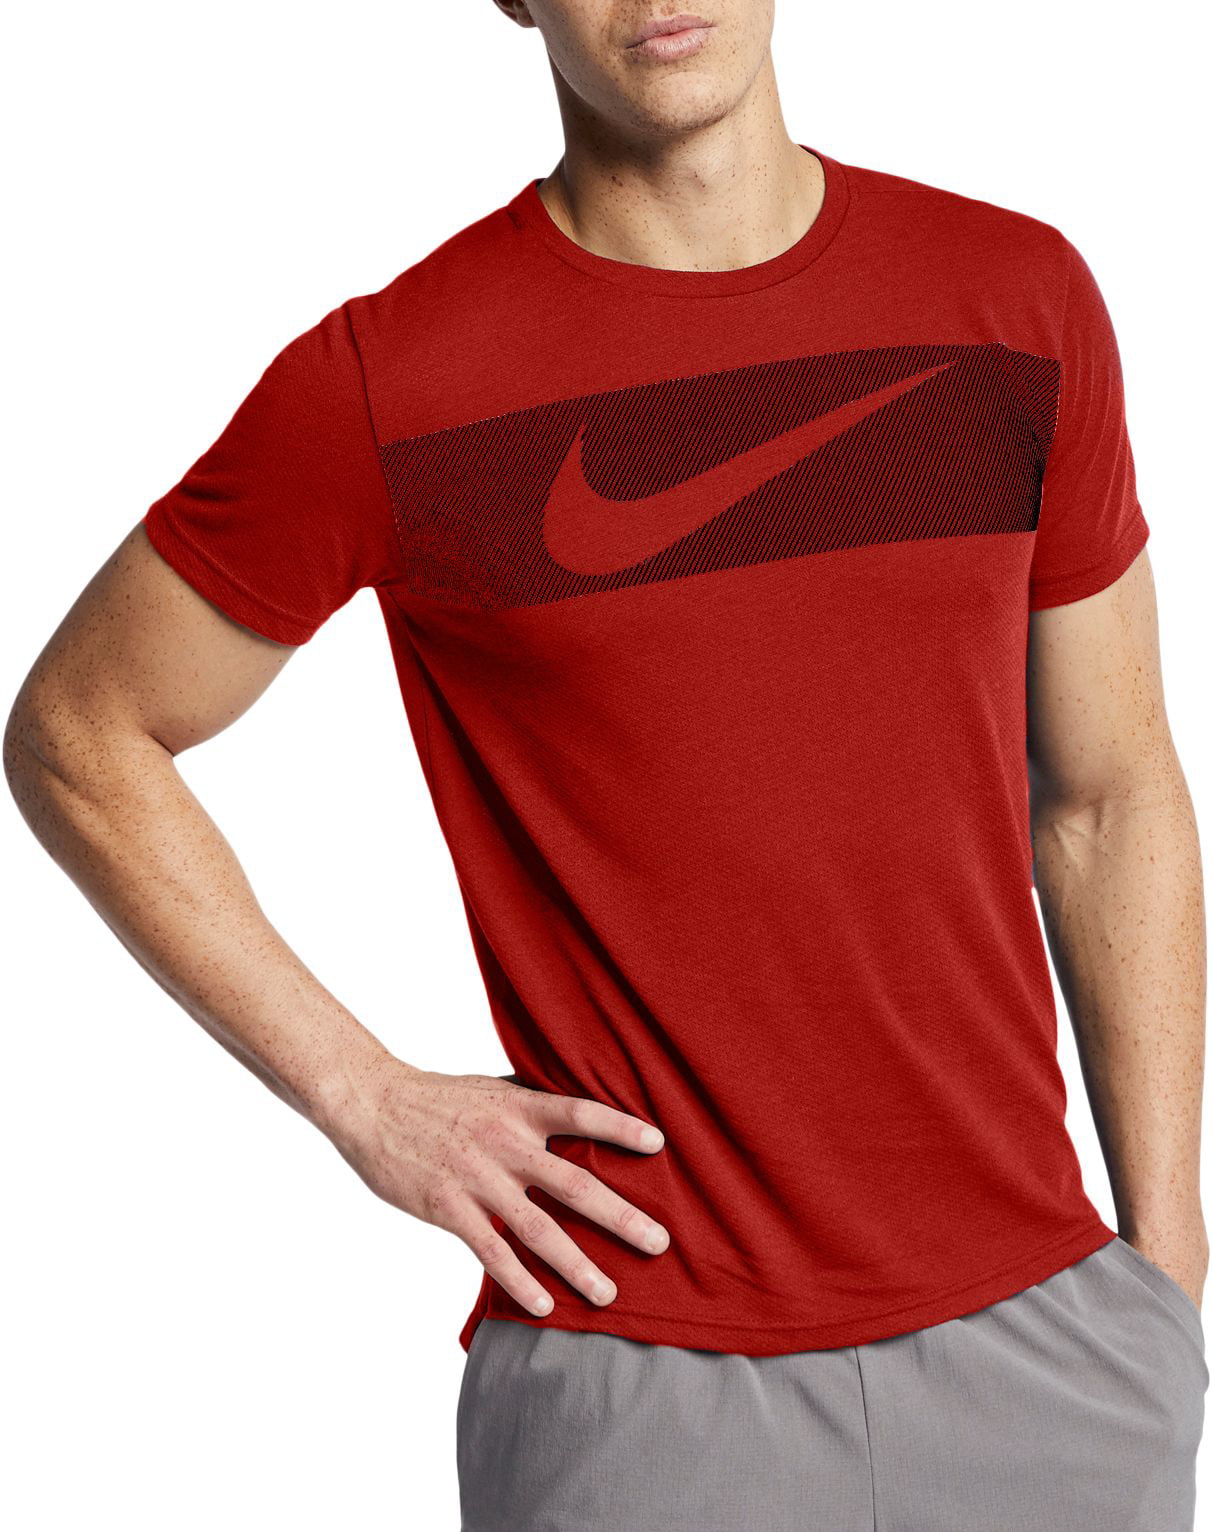 Nike - Nike Men's Hyper Dry Graphic Tee 